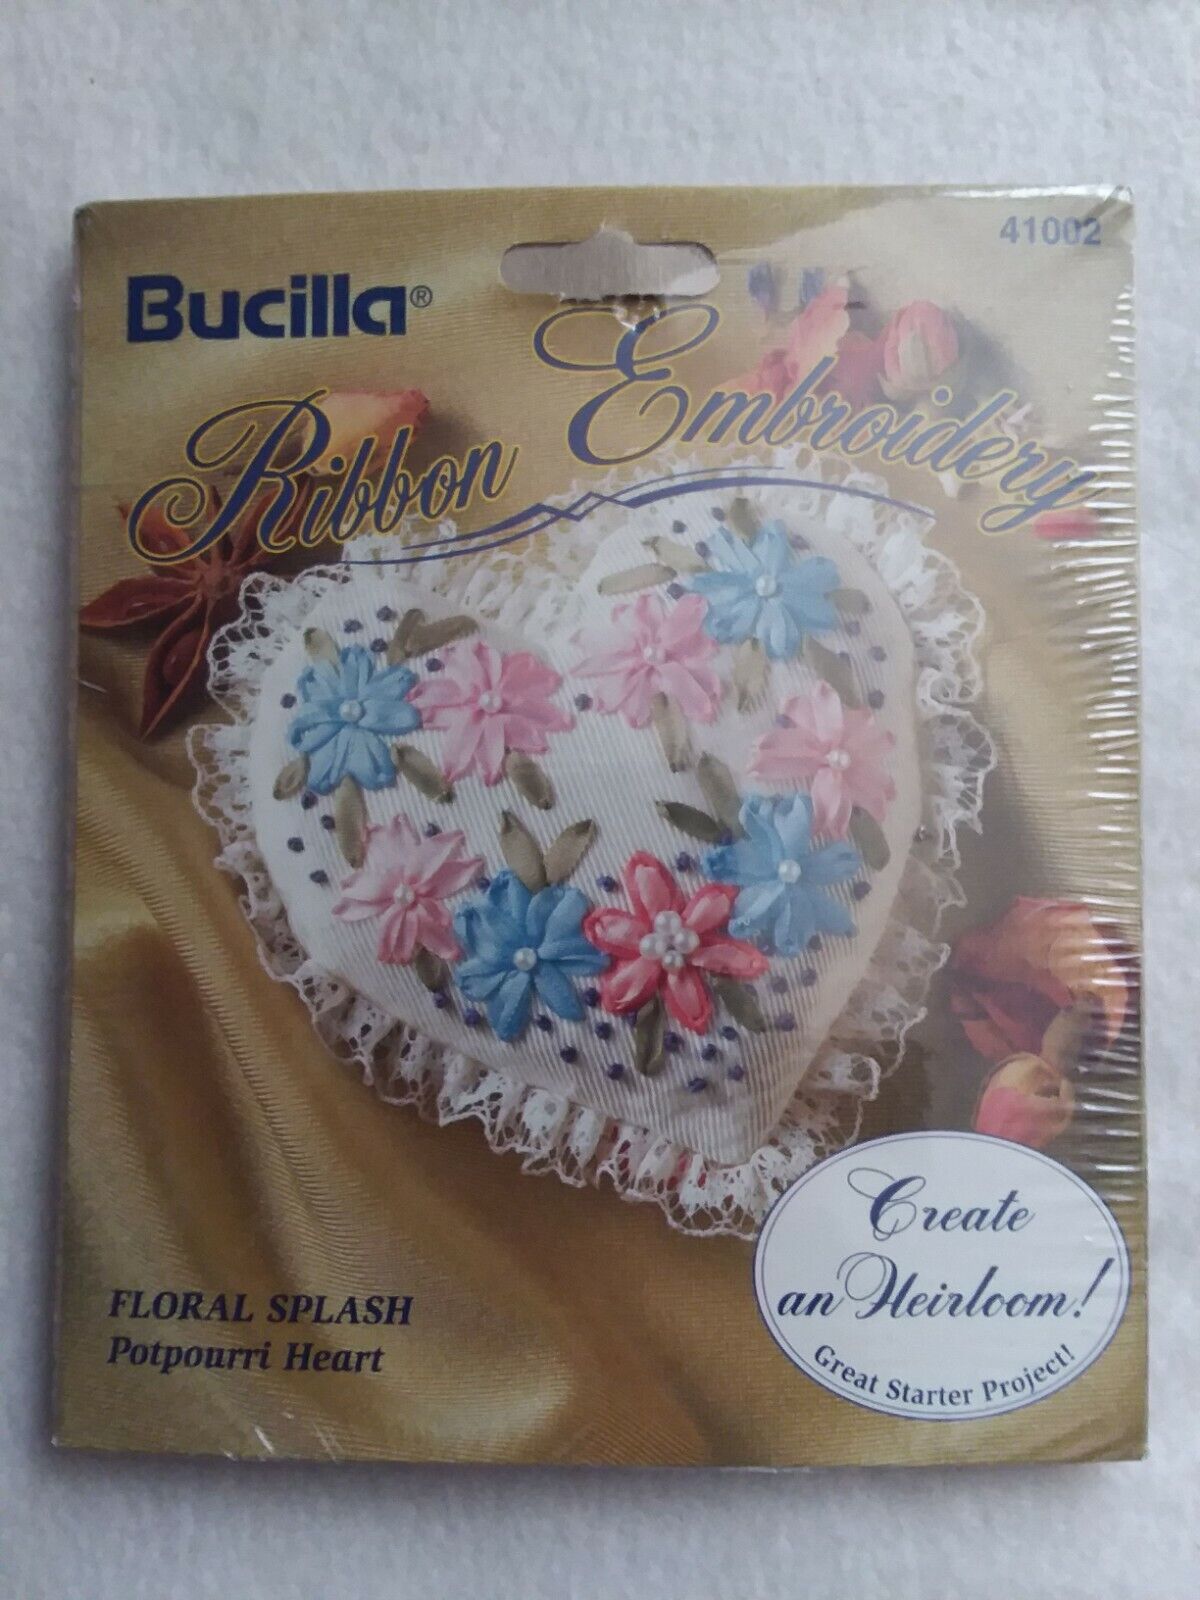 New Bucilla Ribbon Embroidery Kit Floral Splash Potpourri Heart 3"x3" 41002 Nip